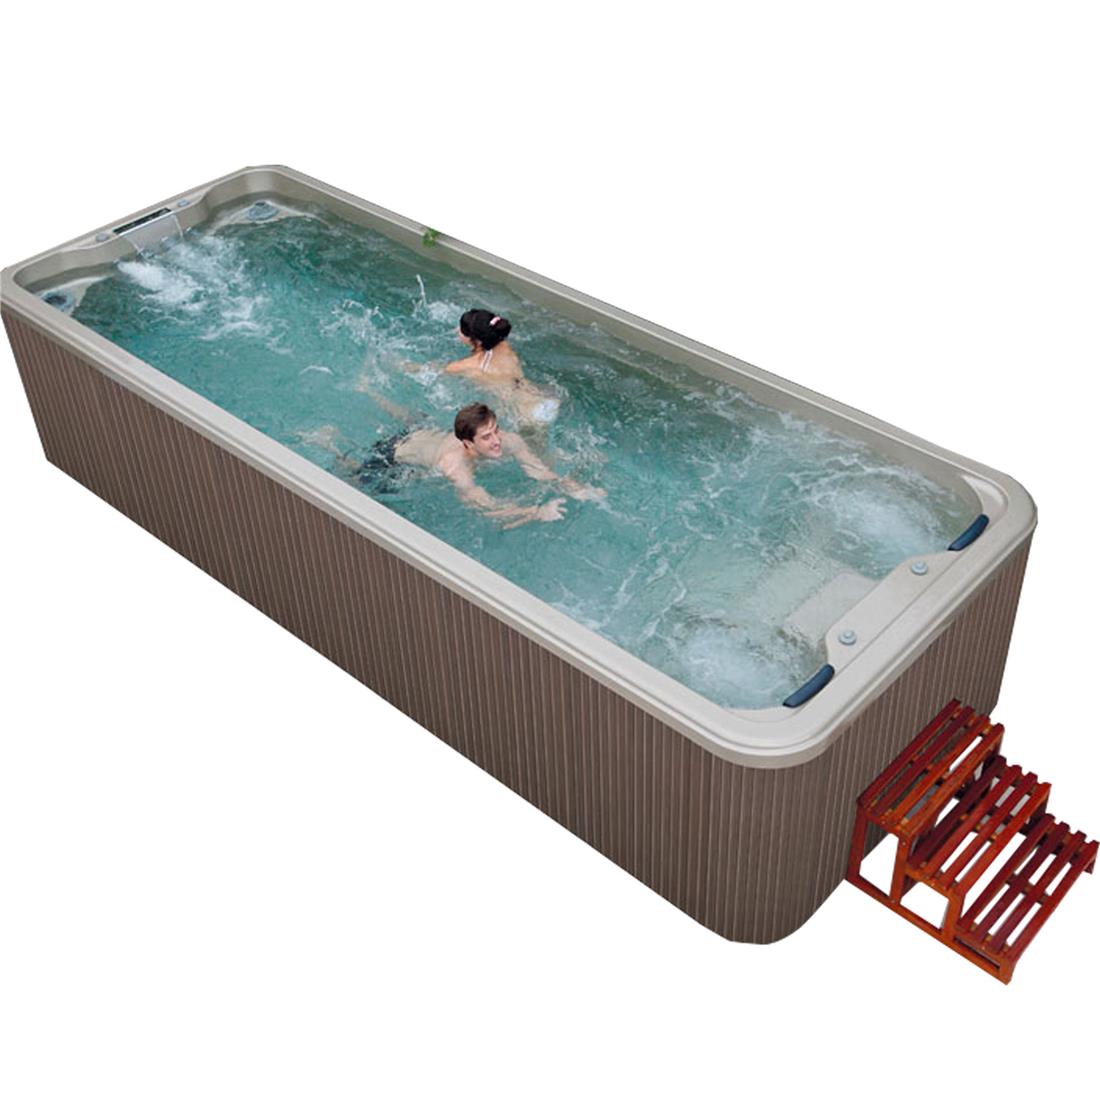 Acrylic Spa Pool Swim/ Hot Tub Pool Combo/ Fibreglass Swimming Pool Hot Tub Combo Inground  HS-A9108